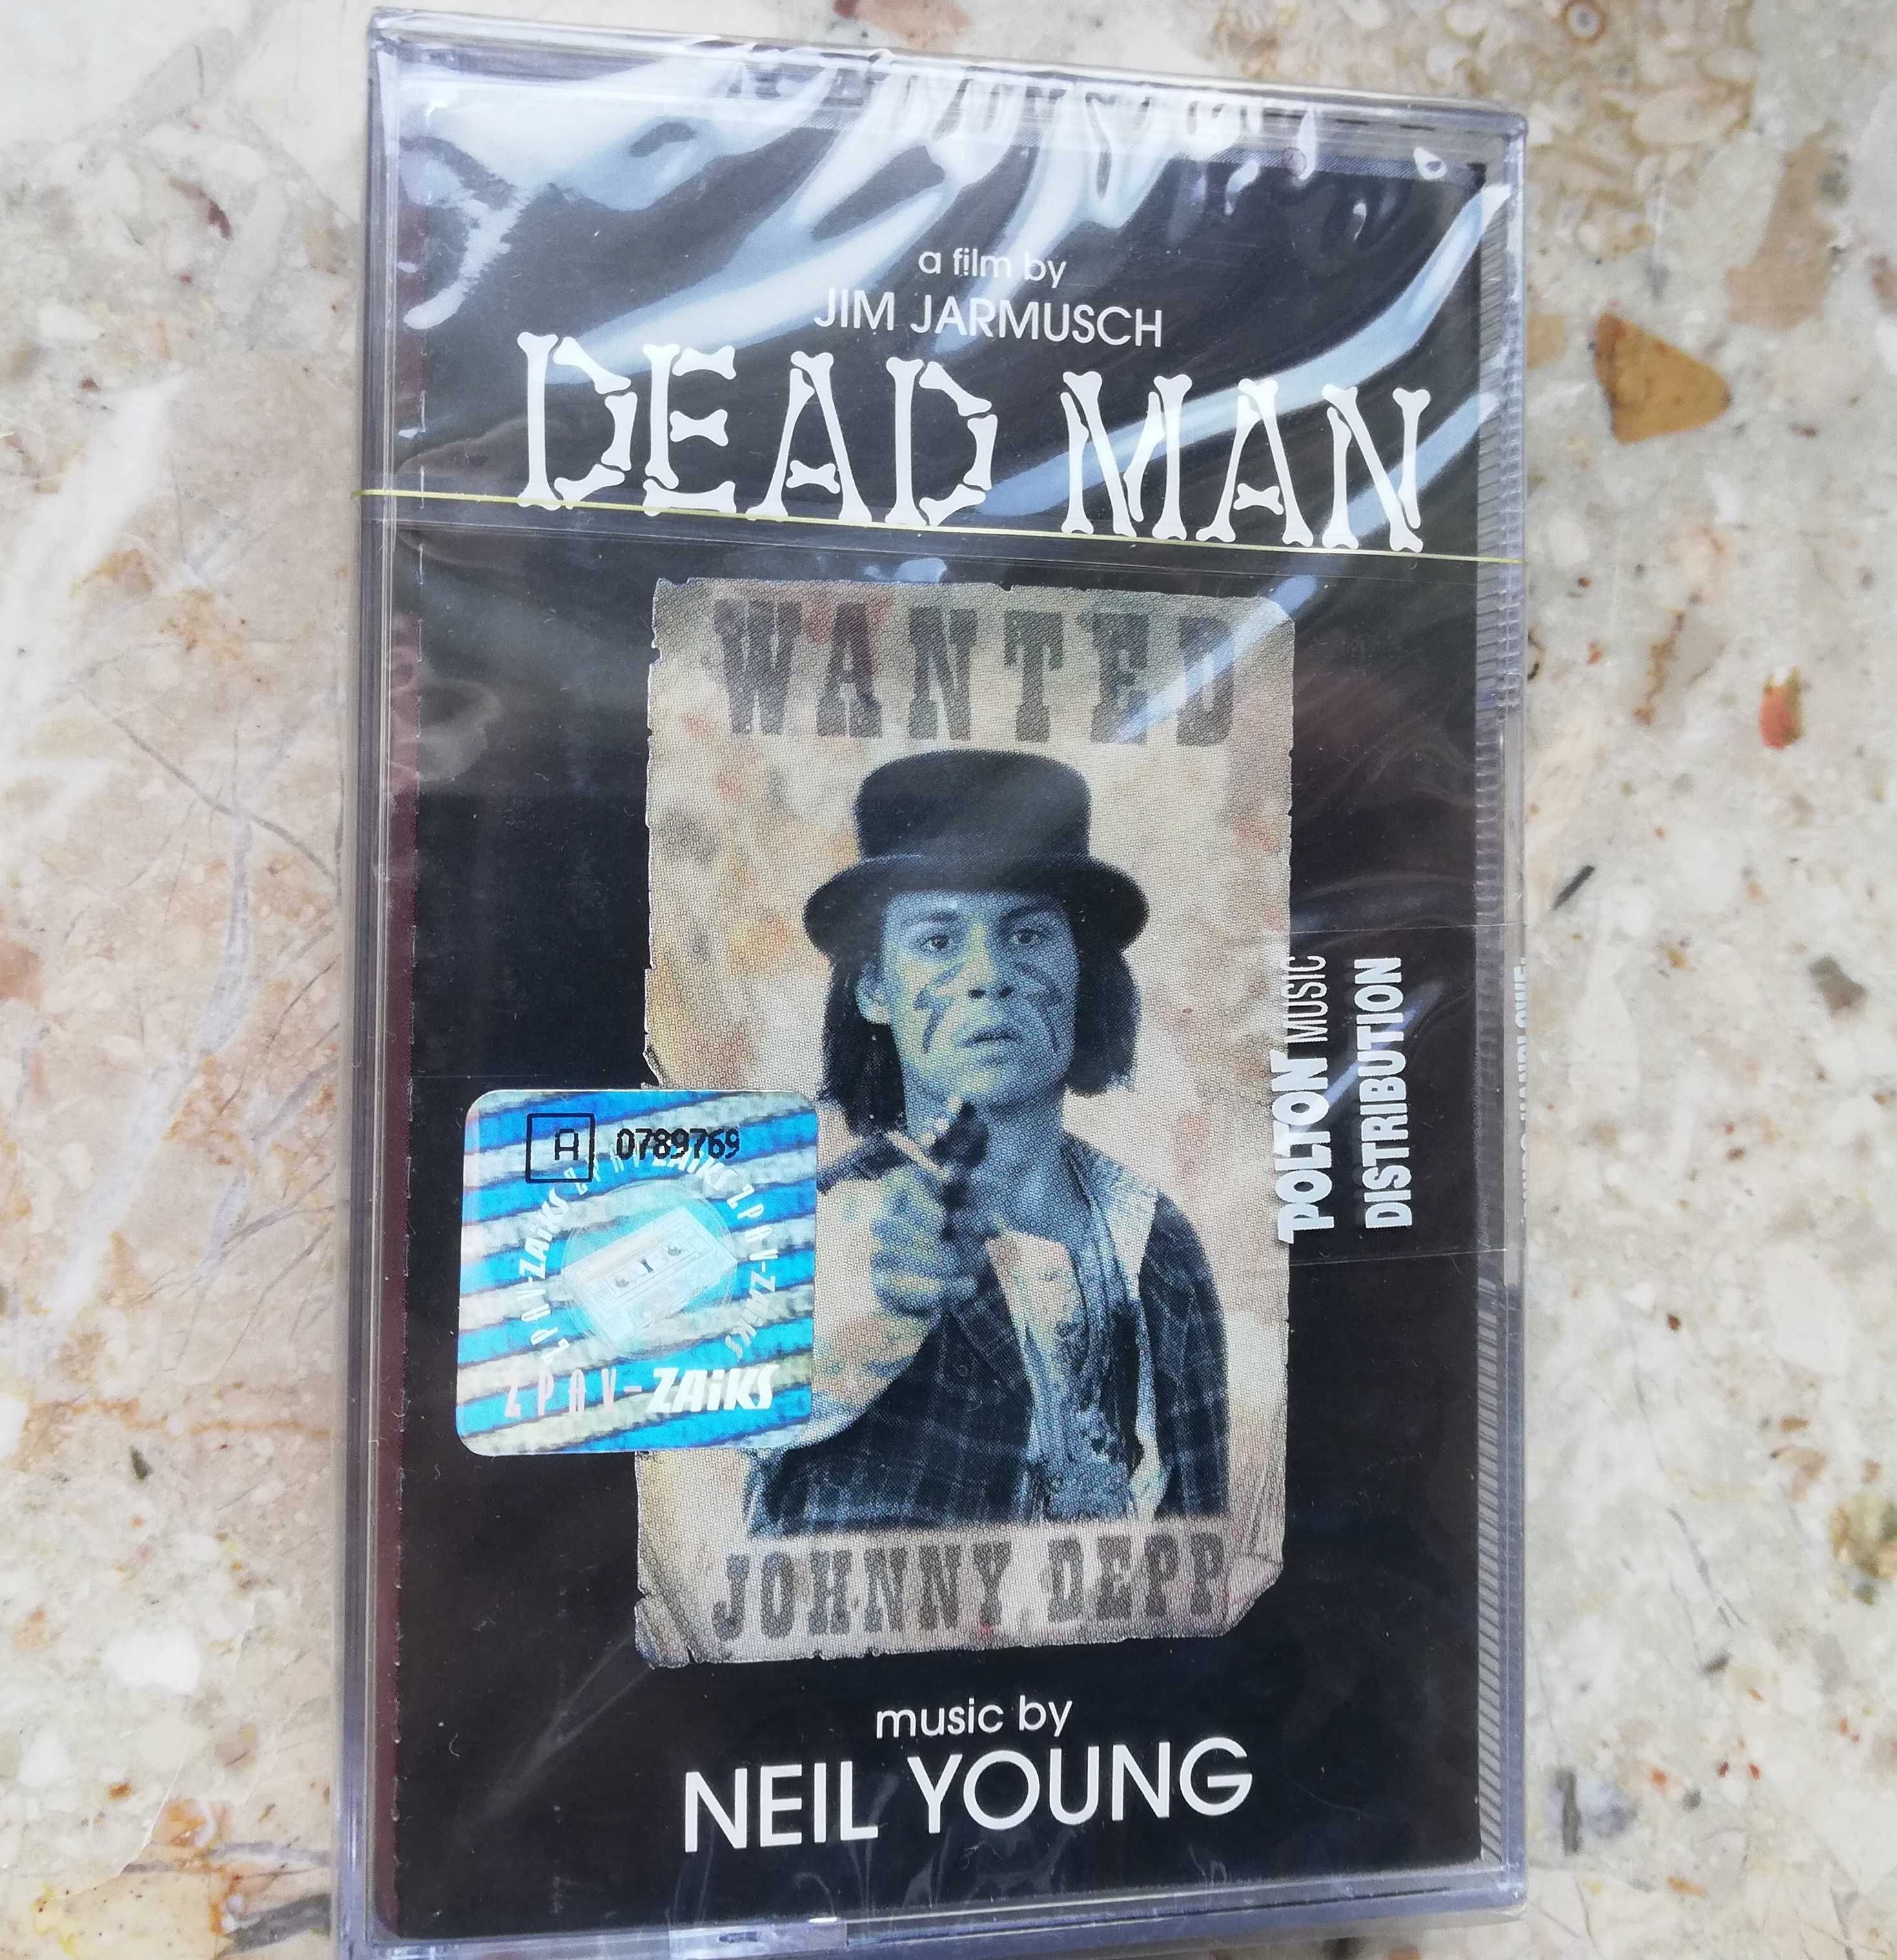 Neil Young  "Dead Man" muzyka z filmu, kaseta. Nowa.